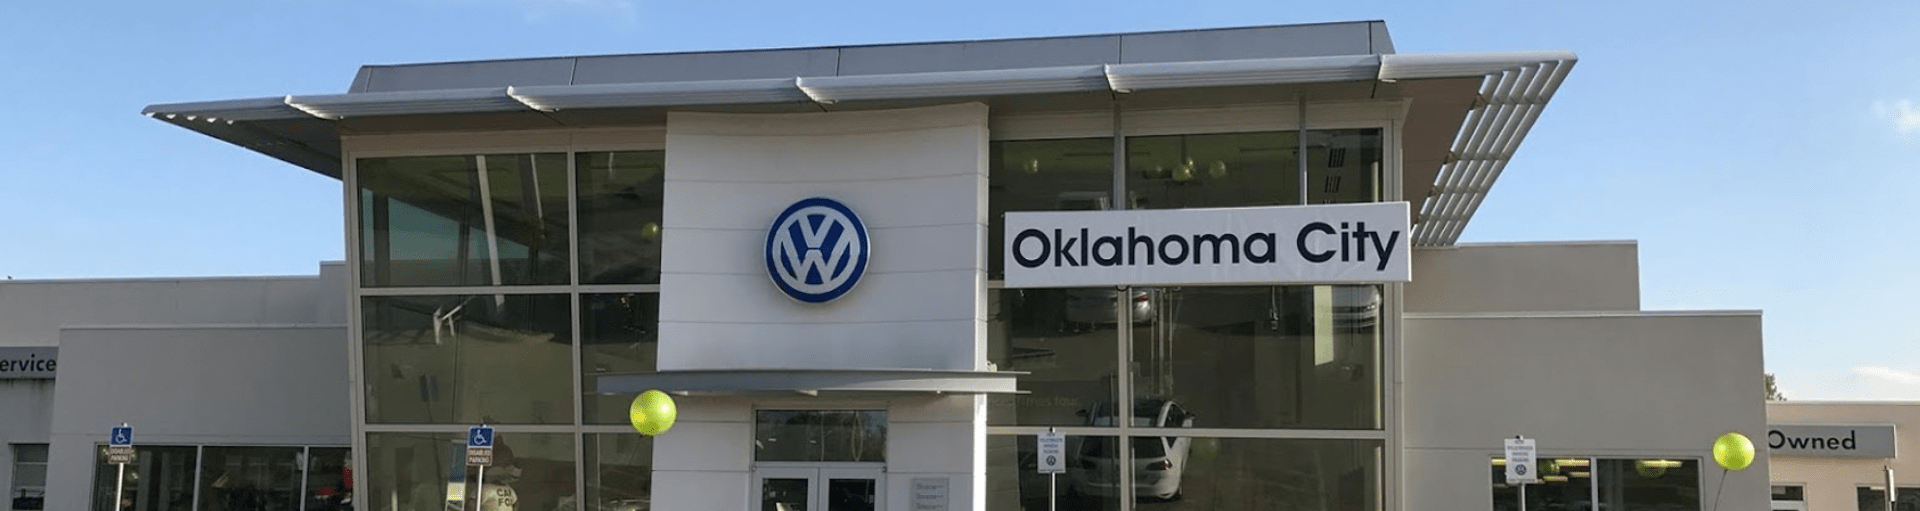 Oklahoma City Volkswagen Electric Vehicle Service & Repair